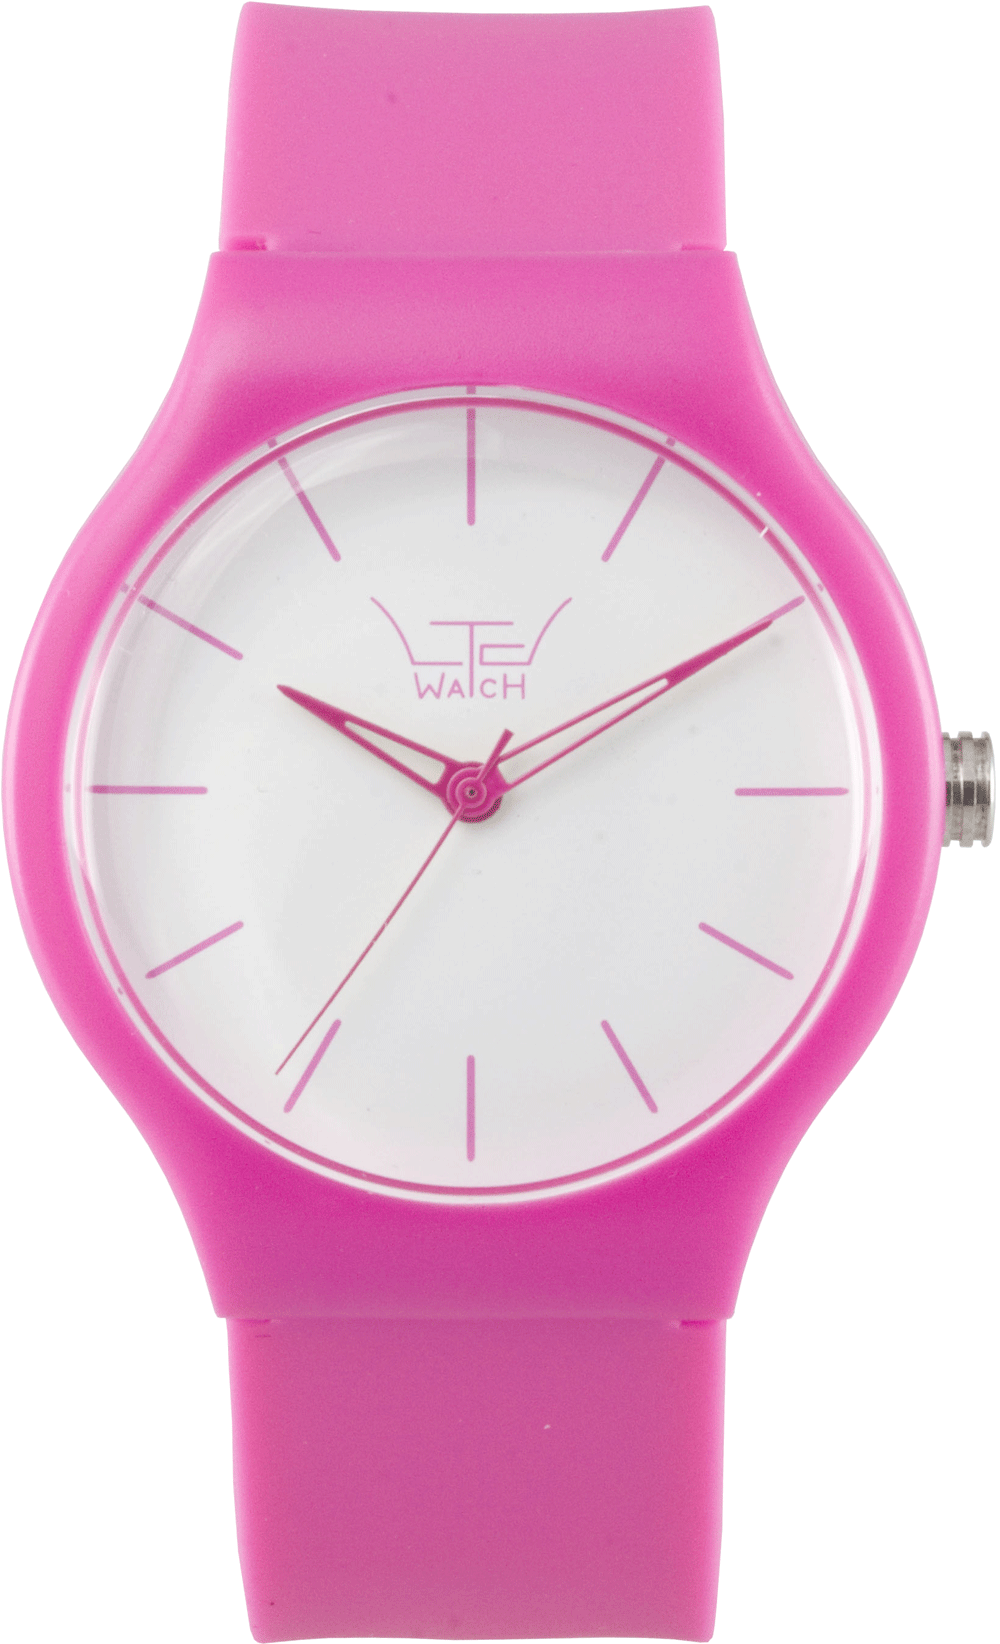 Foto LTD Watch Reloj unisex Pink 091202 foto 733204